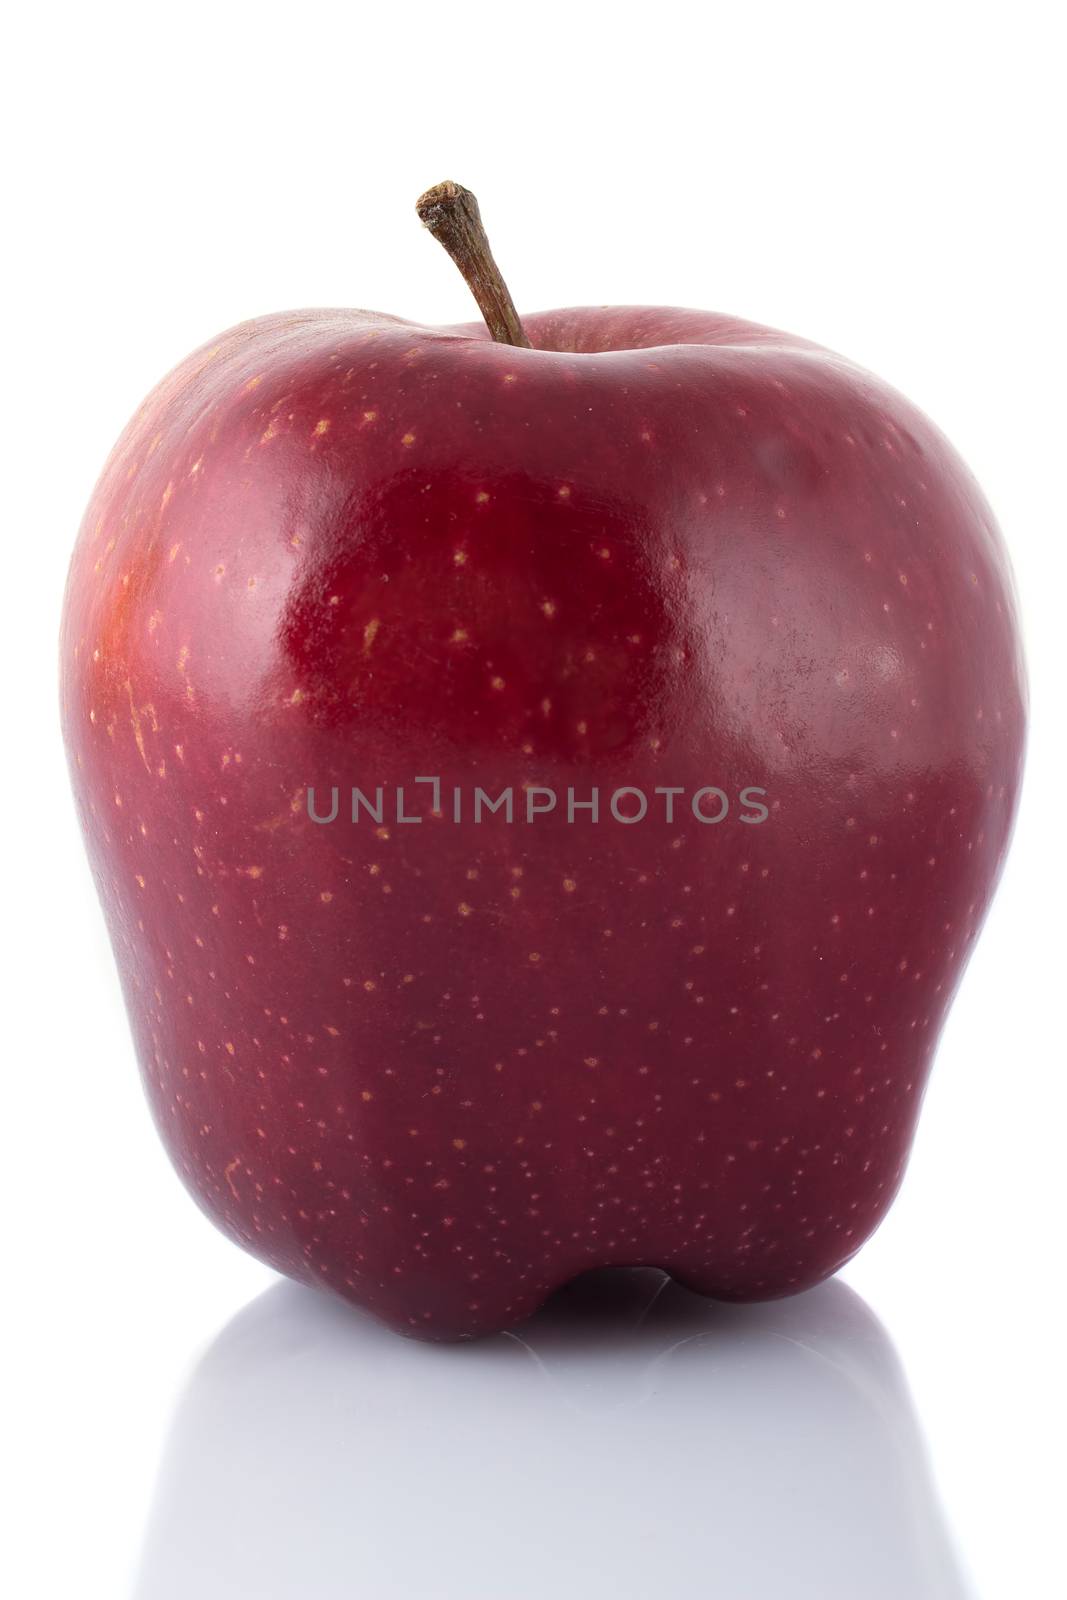 Juicy red apple by baronvsp